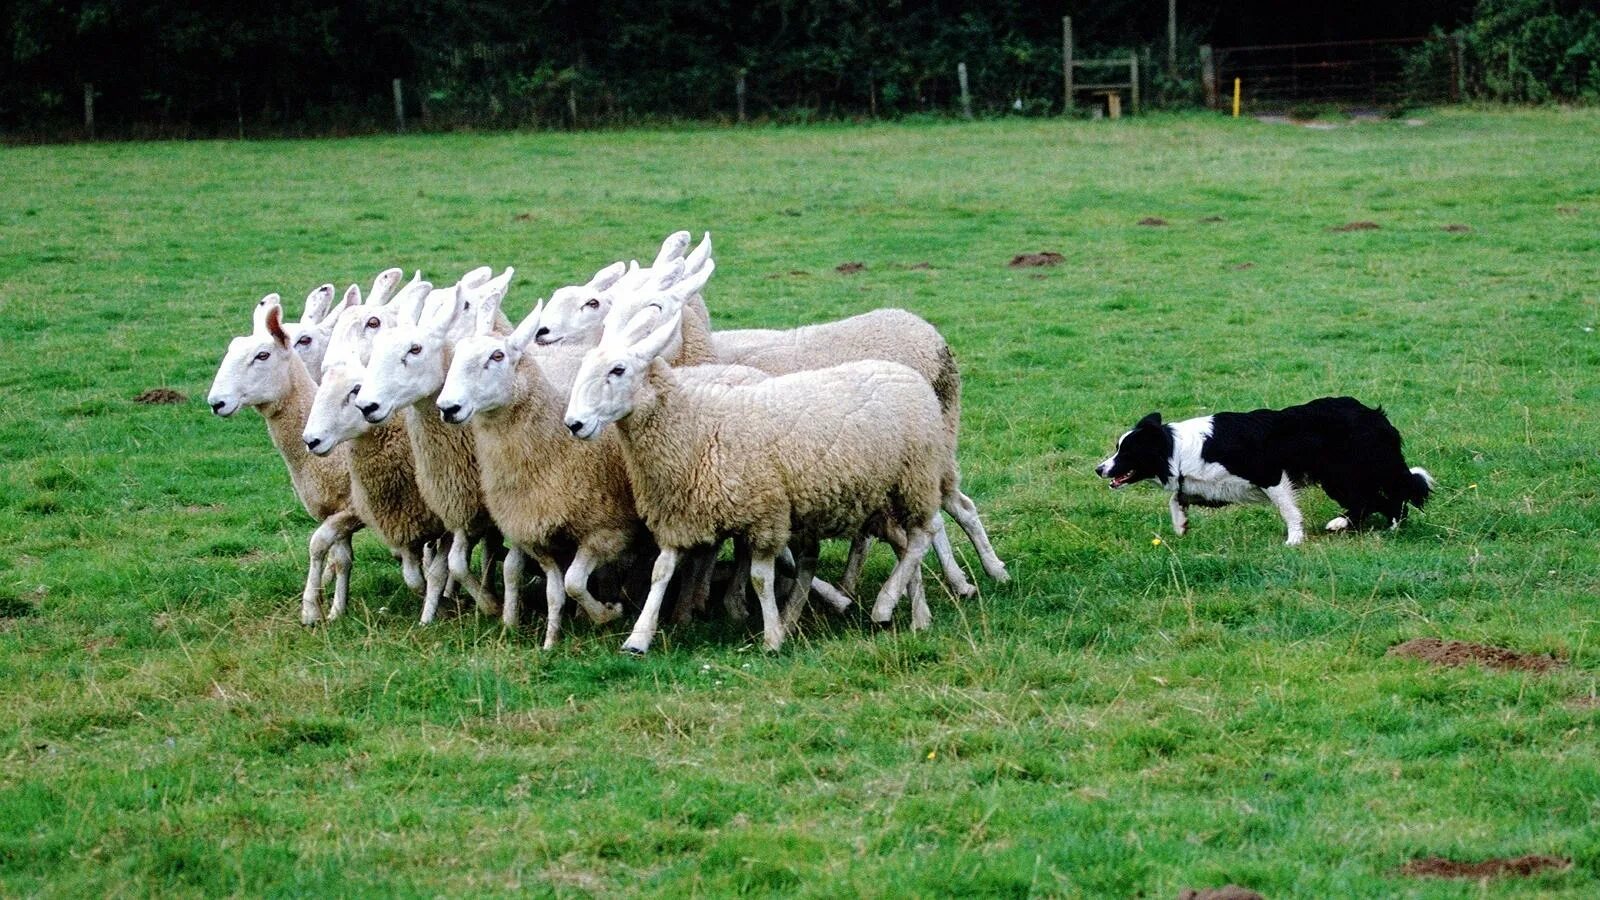 Пасу овечек. Бордер колли пастух. Бордер колли пасет овец. Порода собак Пастухов овец. Собака пастух порода бордер колли.